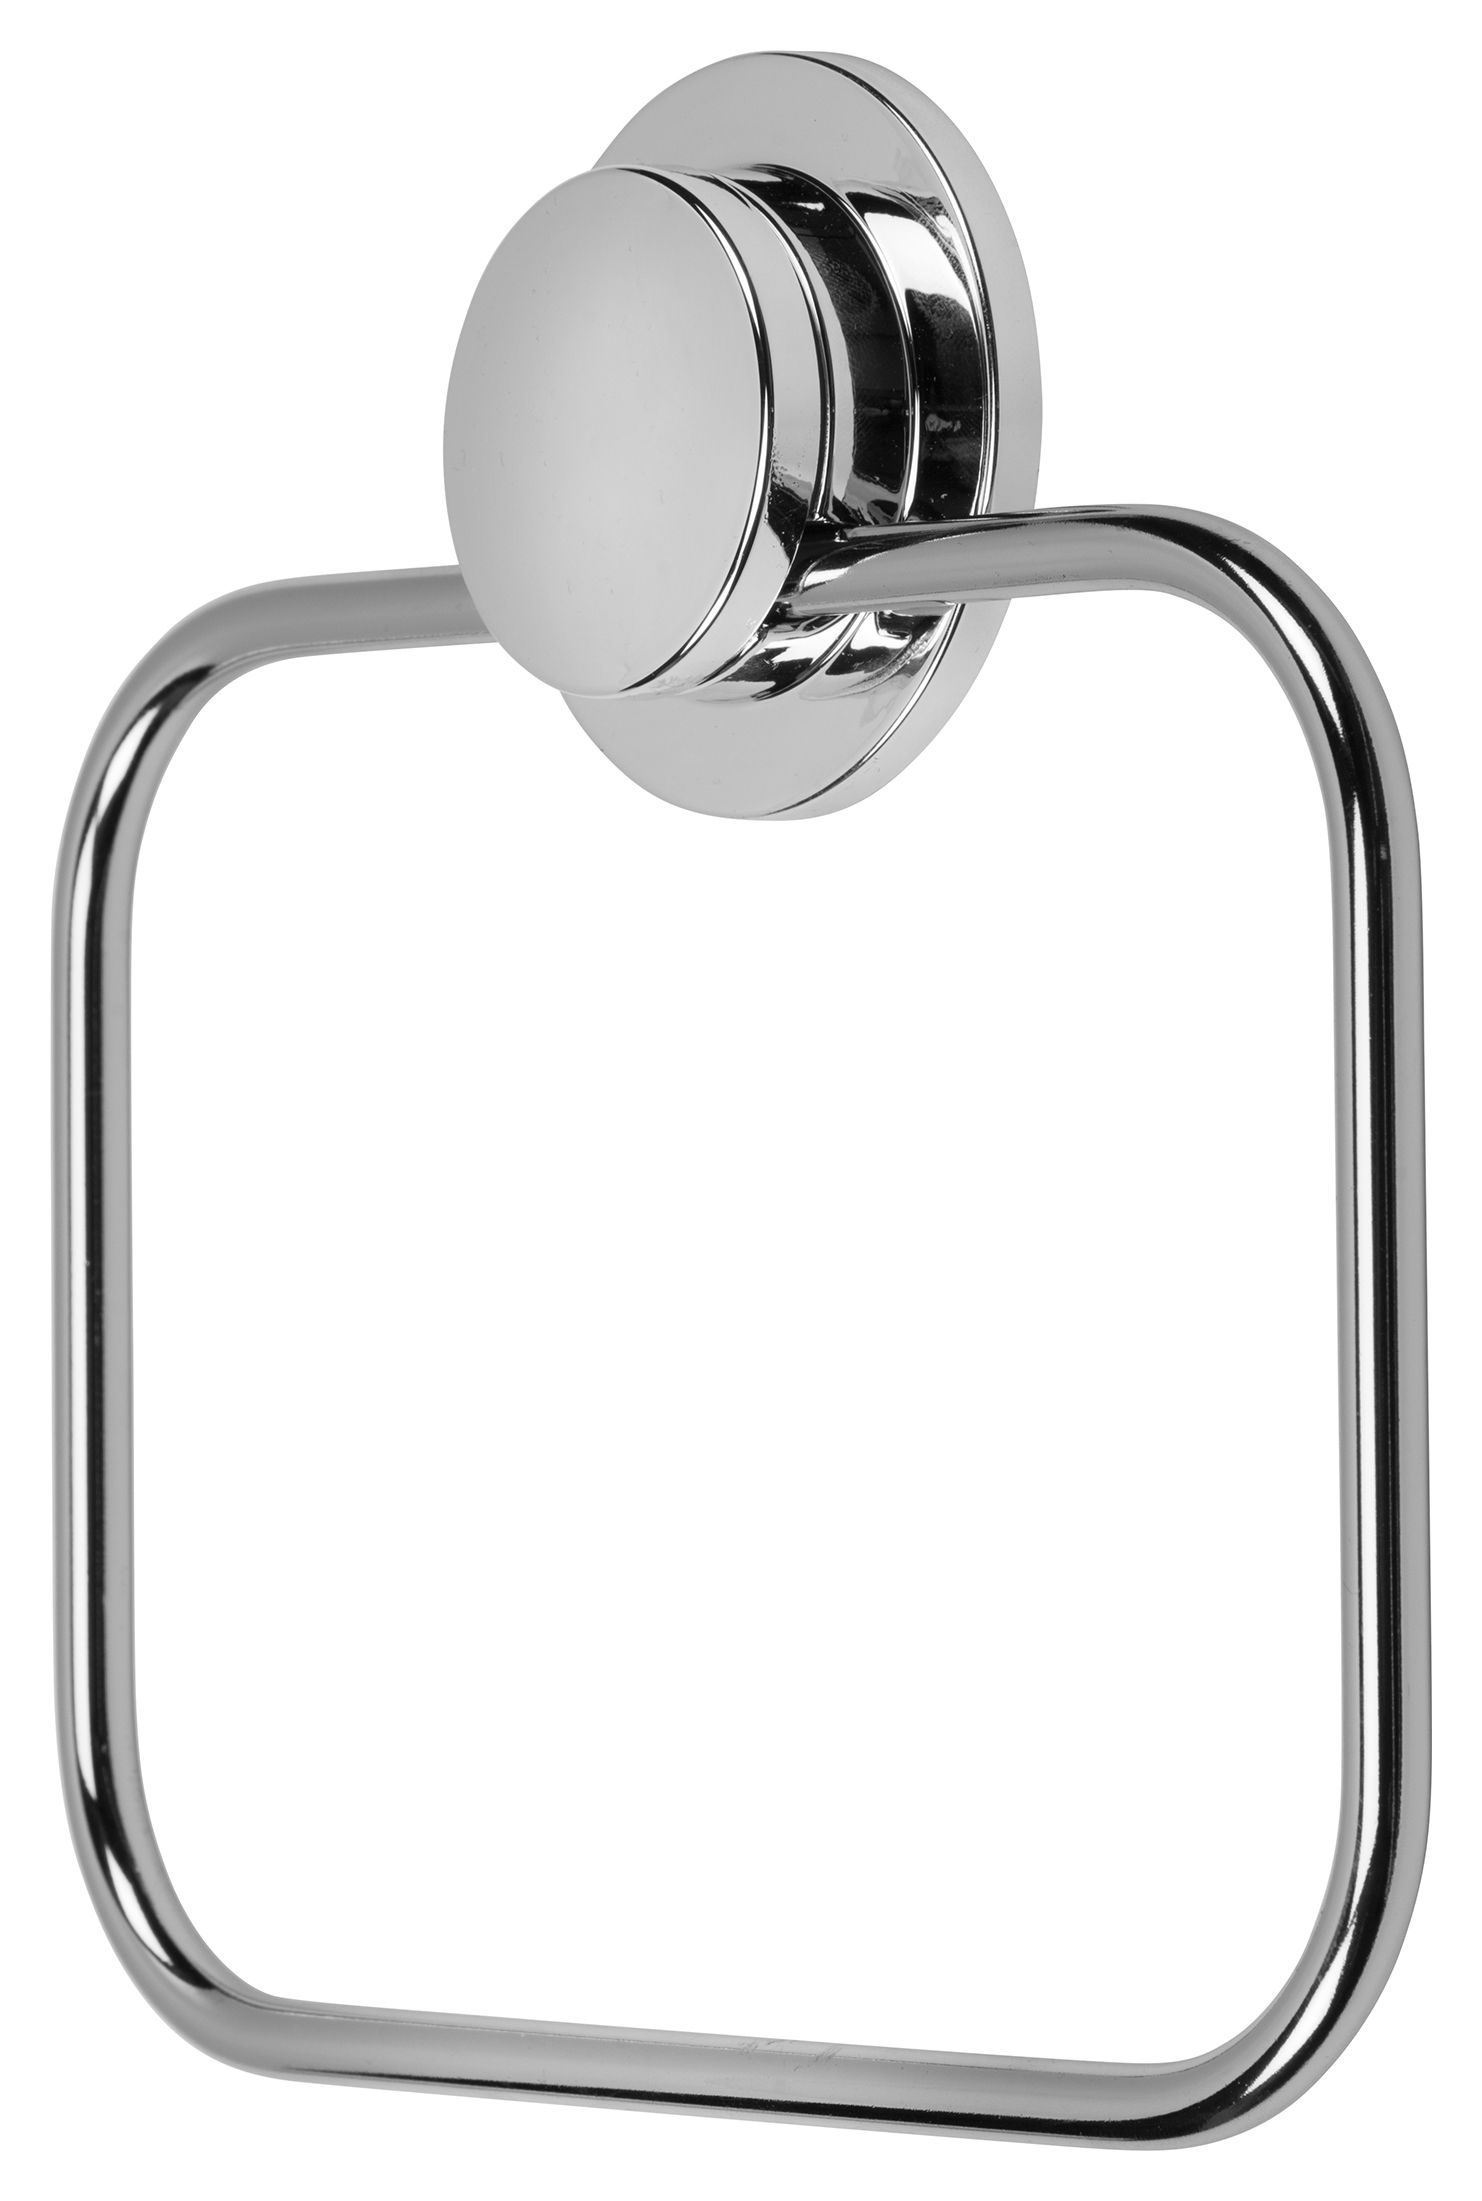 Image of Croydex Stick 'n' Lock™ Bathroom Towel Ring - Chrome